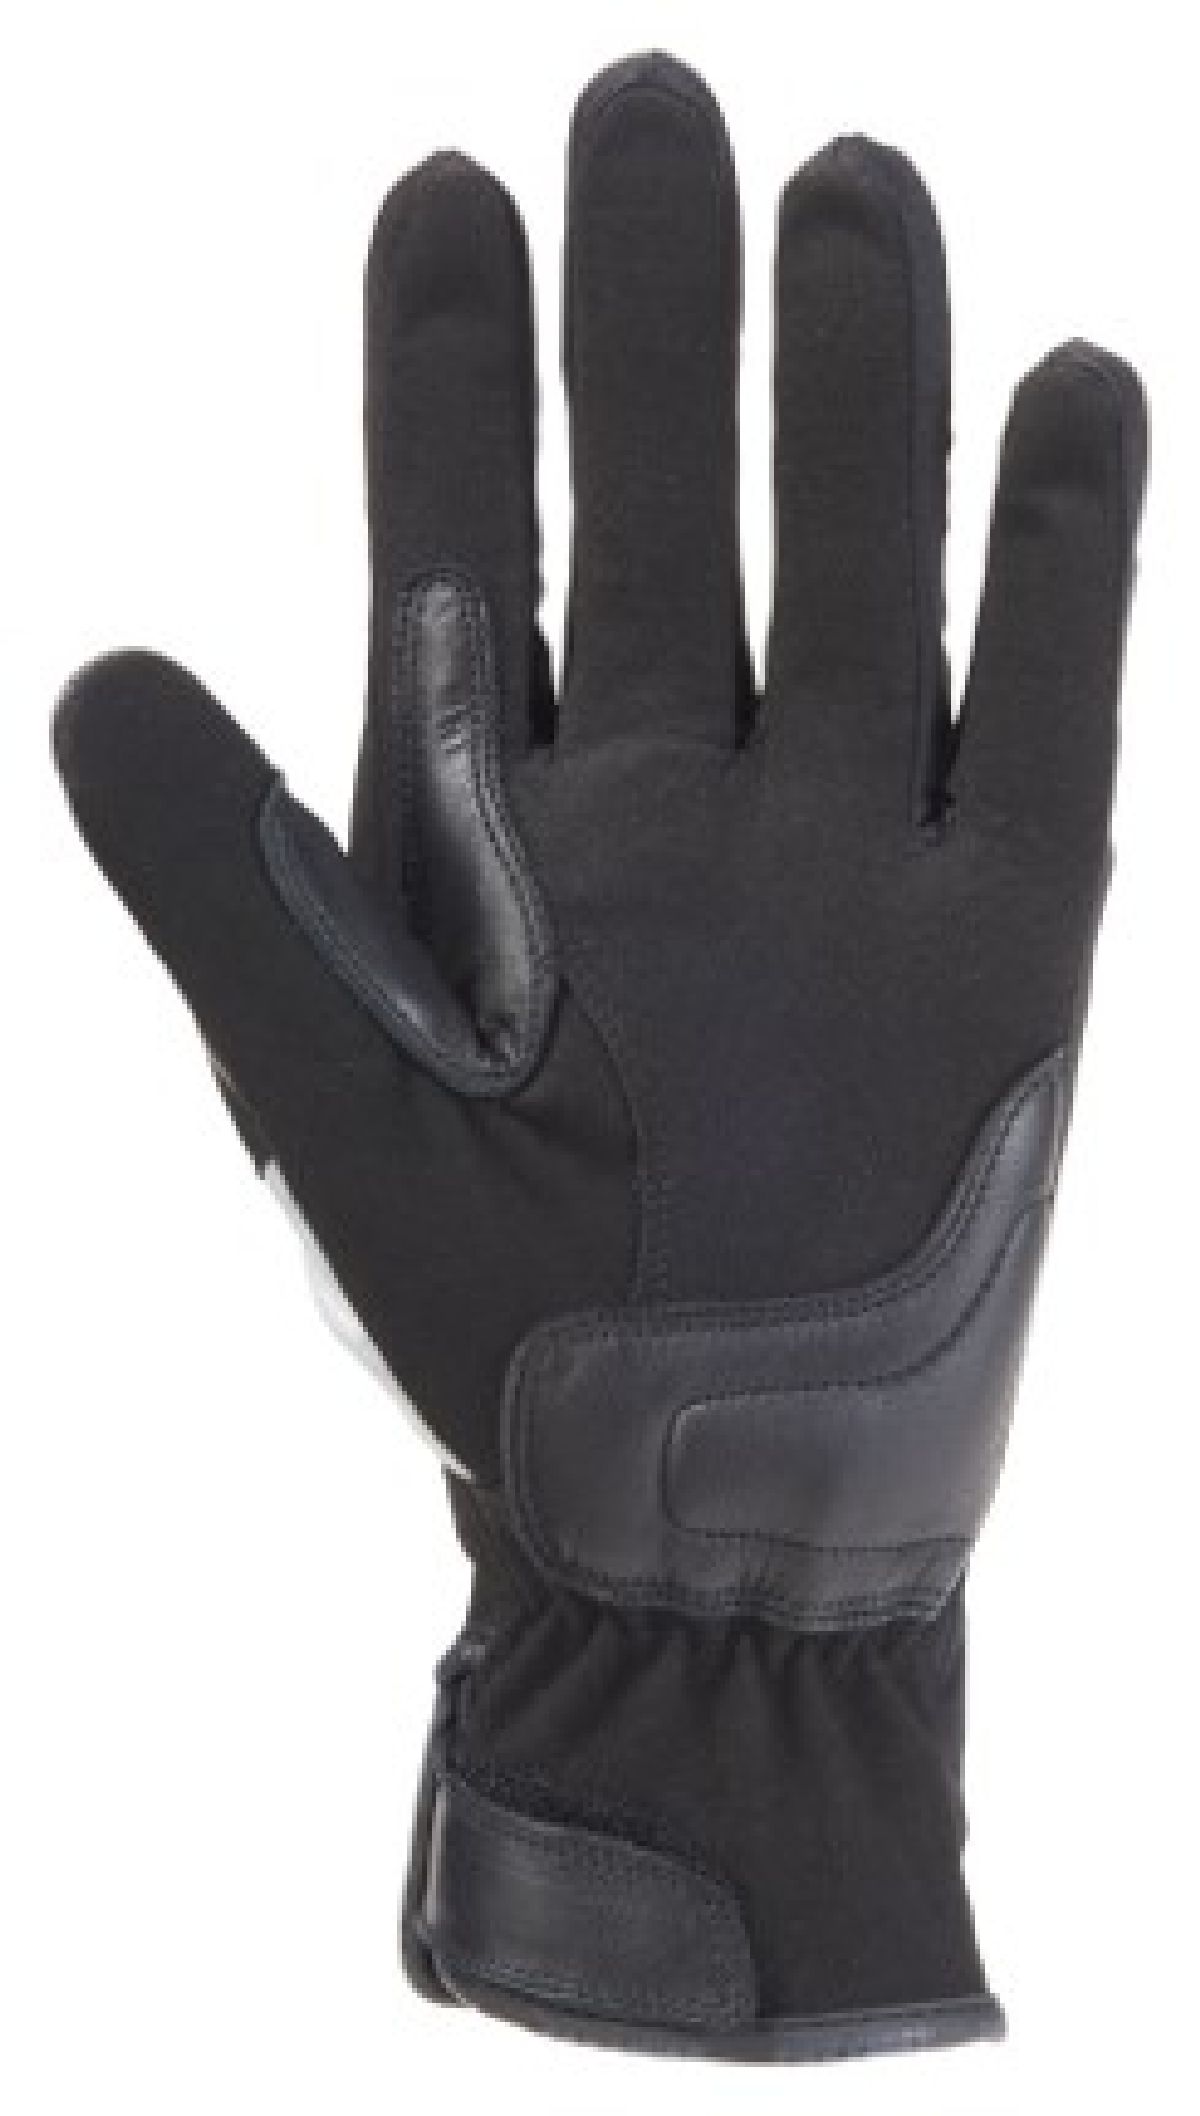 Easy II gants Noir/Gris XL